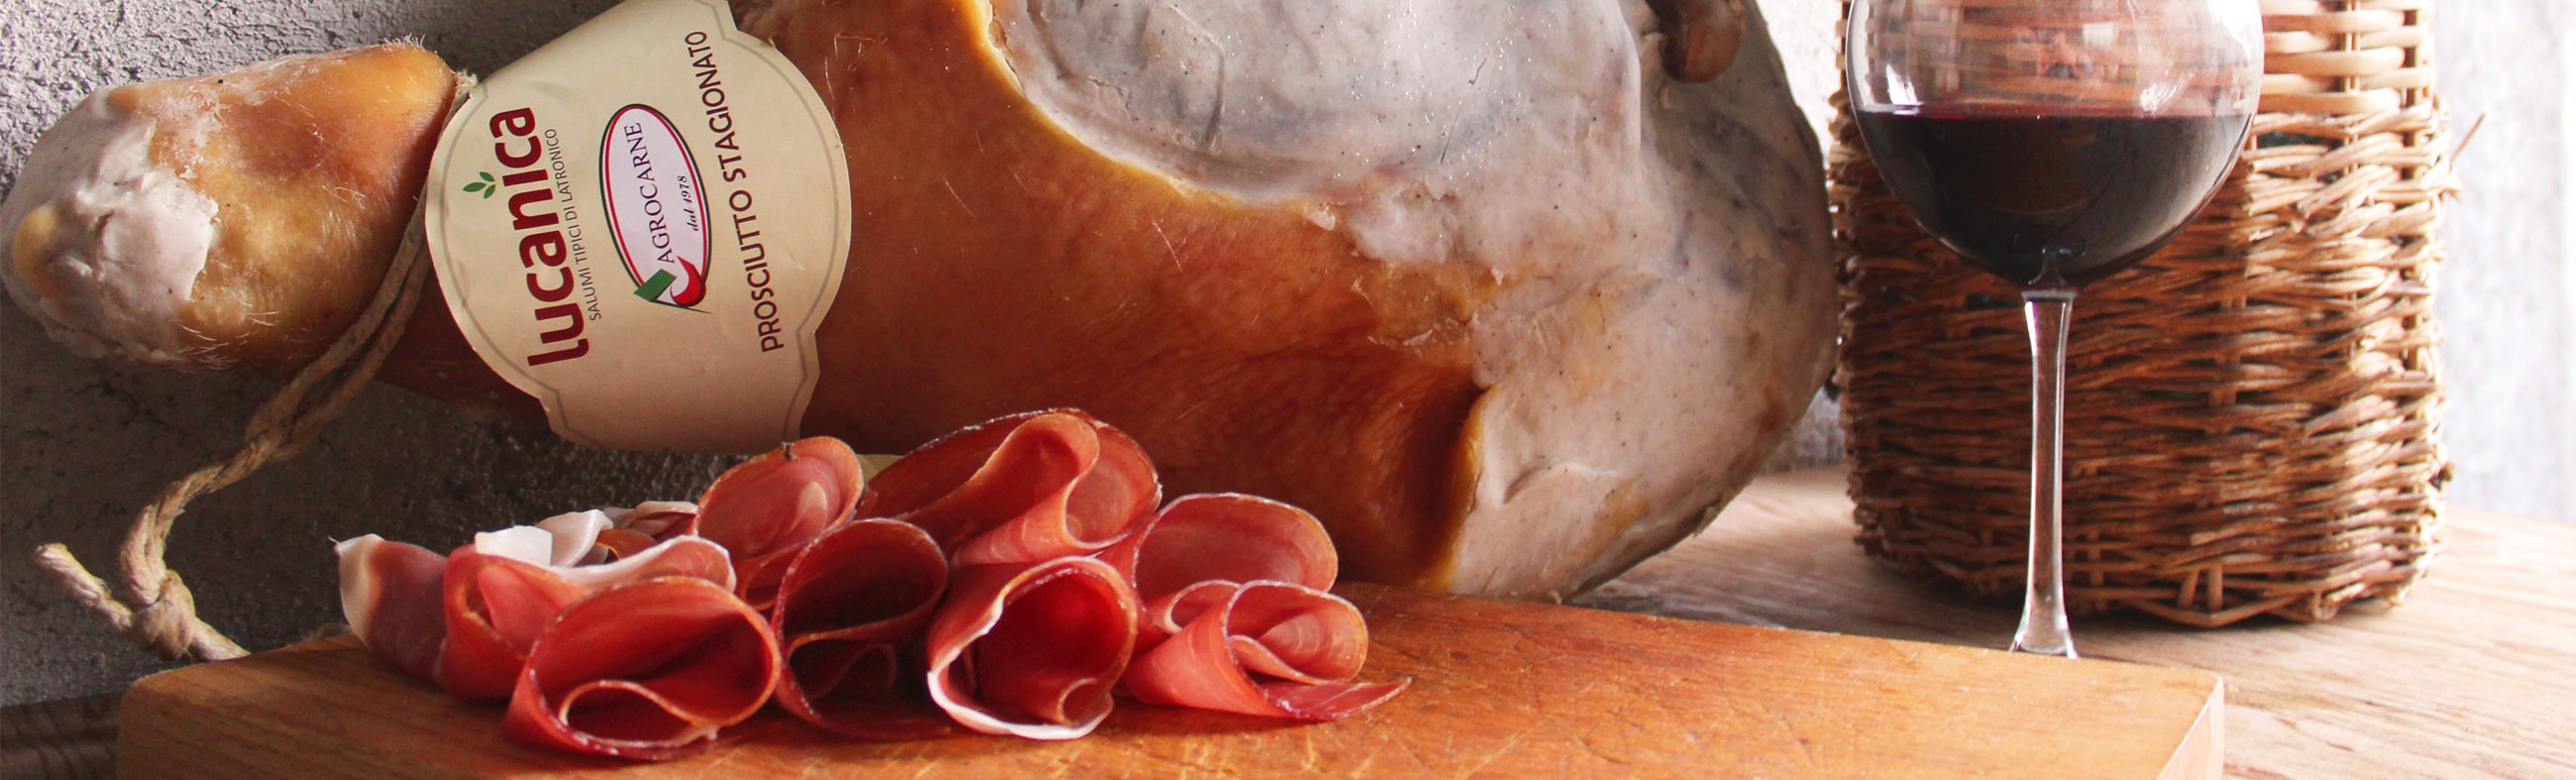 Prosciutto crudo lucanica: intense and unmistakable taste